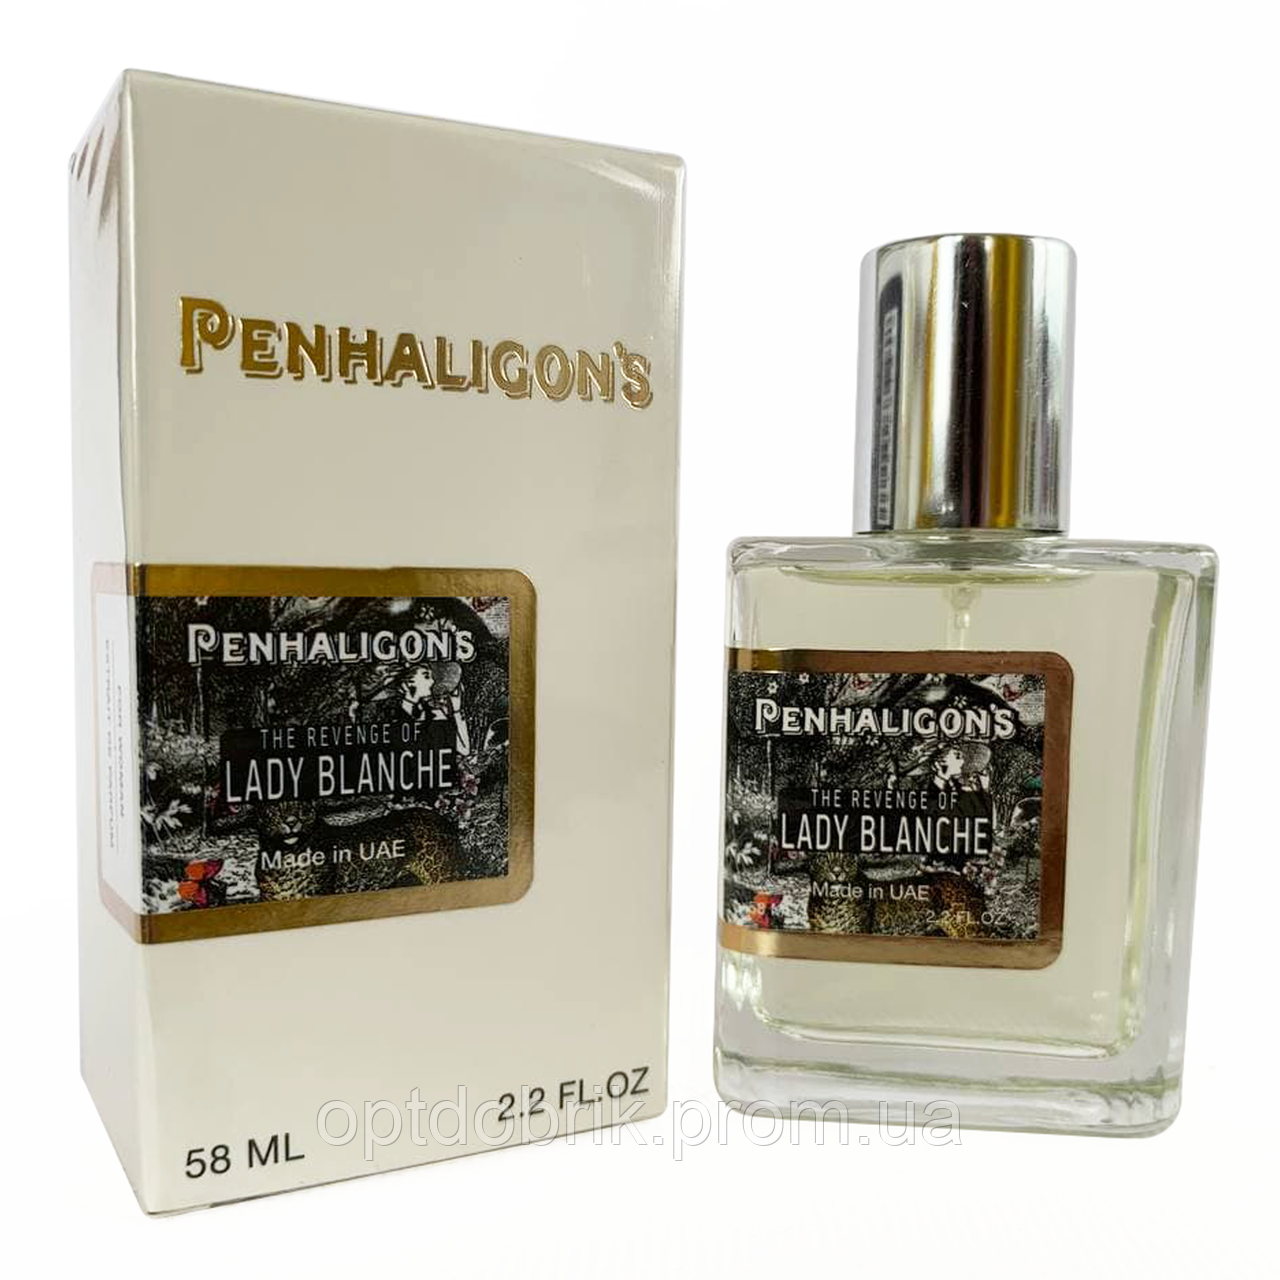 Penhaligons Portraits The Revenge of Lady Blanche Perfume Newly женский 58 мл